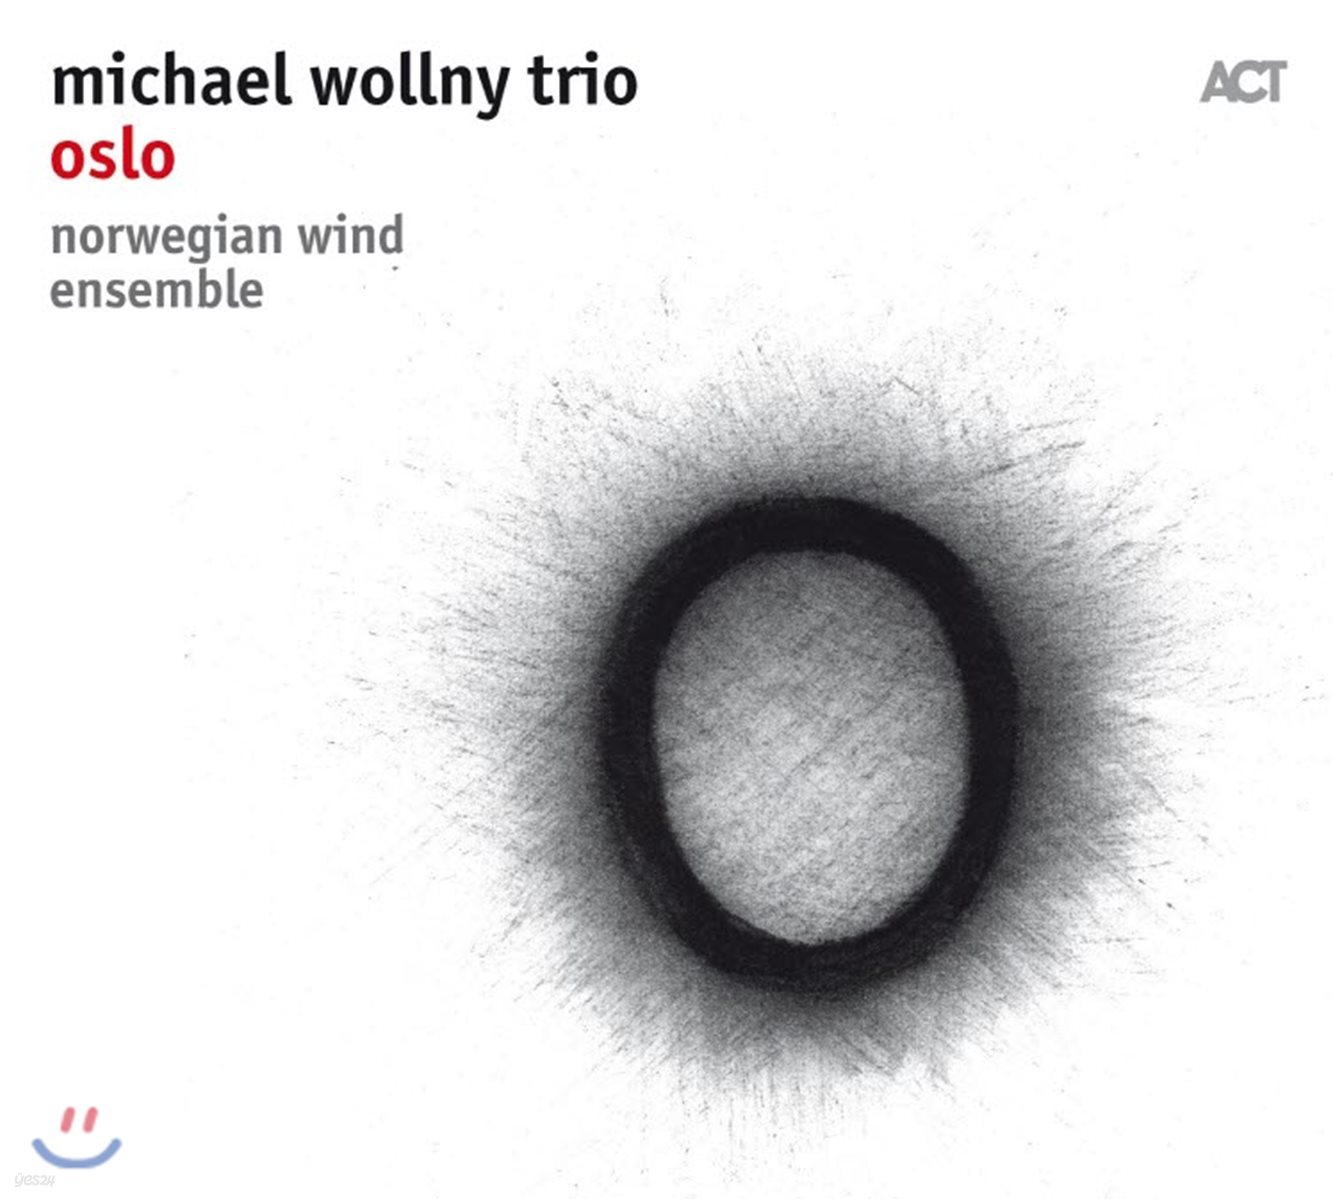 Michael Wollny Trio (미하엘 볼니 트리오) - Oslo